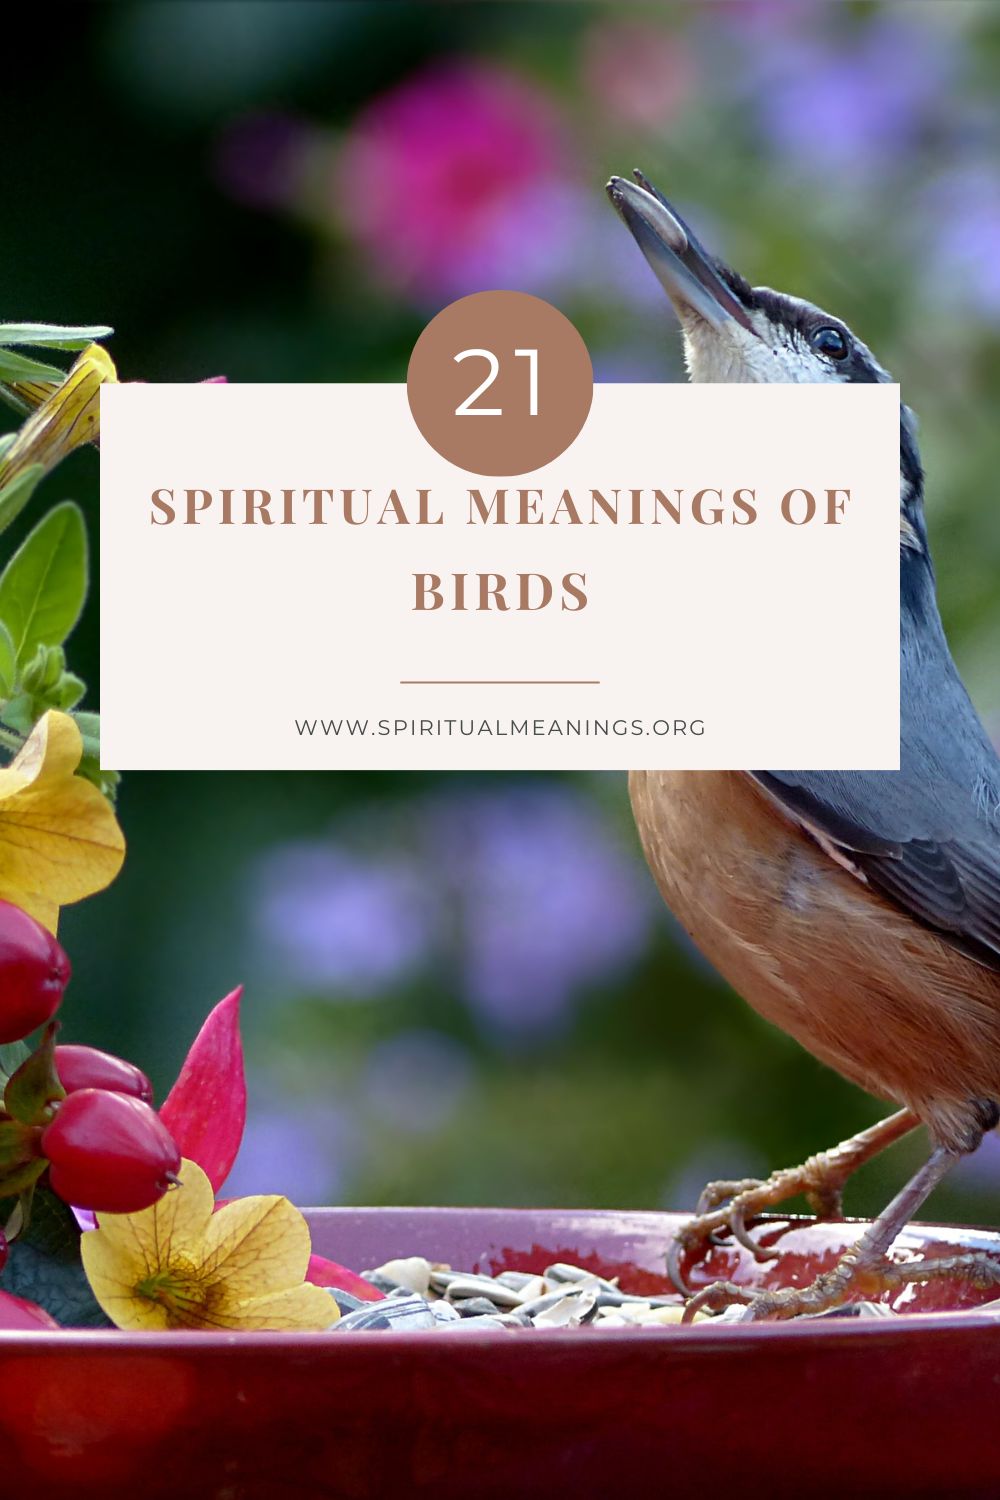 Spiritual meanings of birds